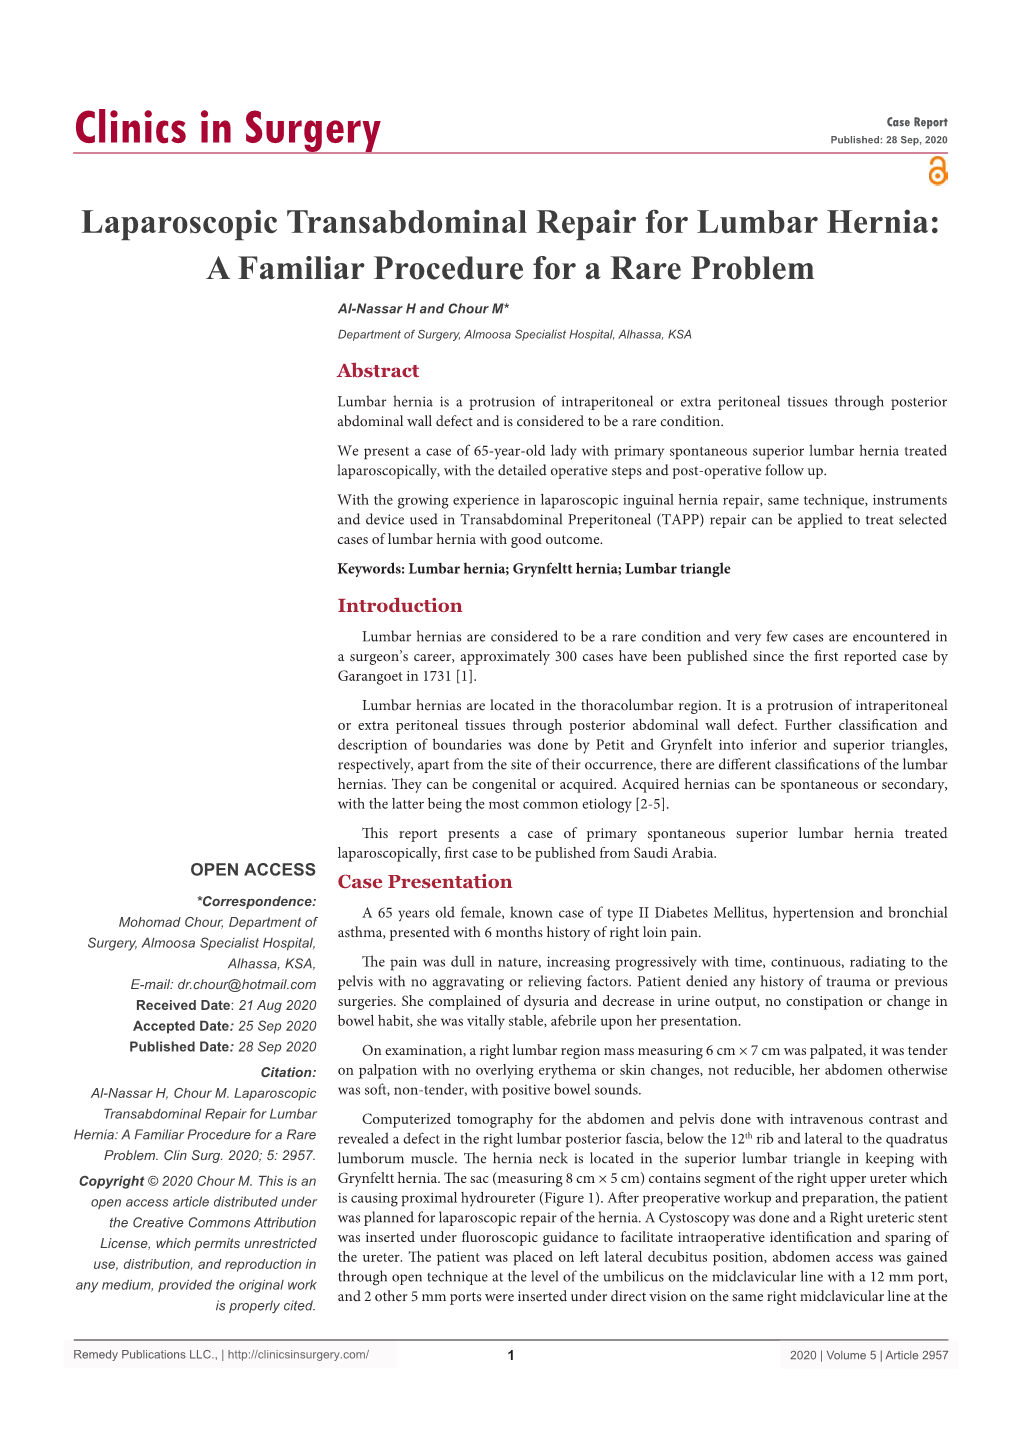 Laparoscopic Transabdominal Repair for Lumbar Hernia: a Familiar Procedure for a Rare Problem